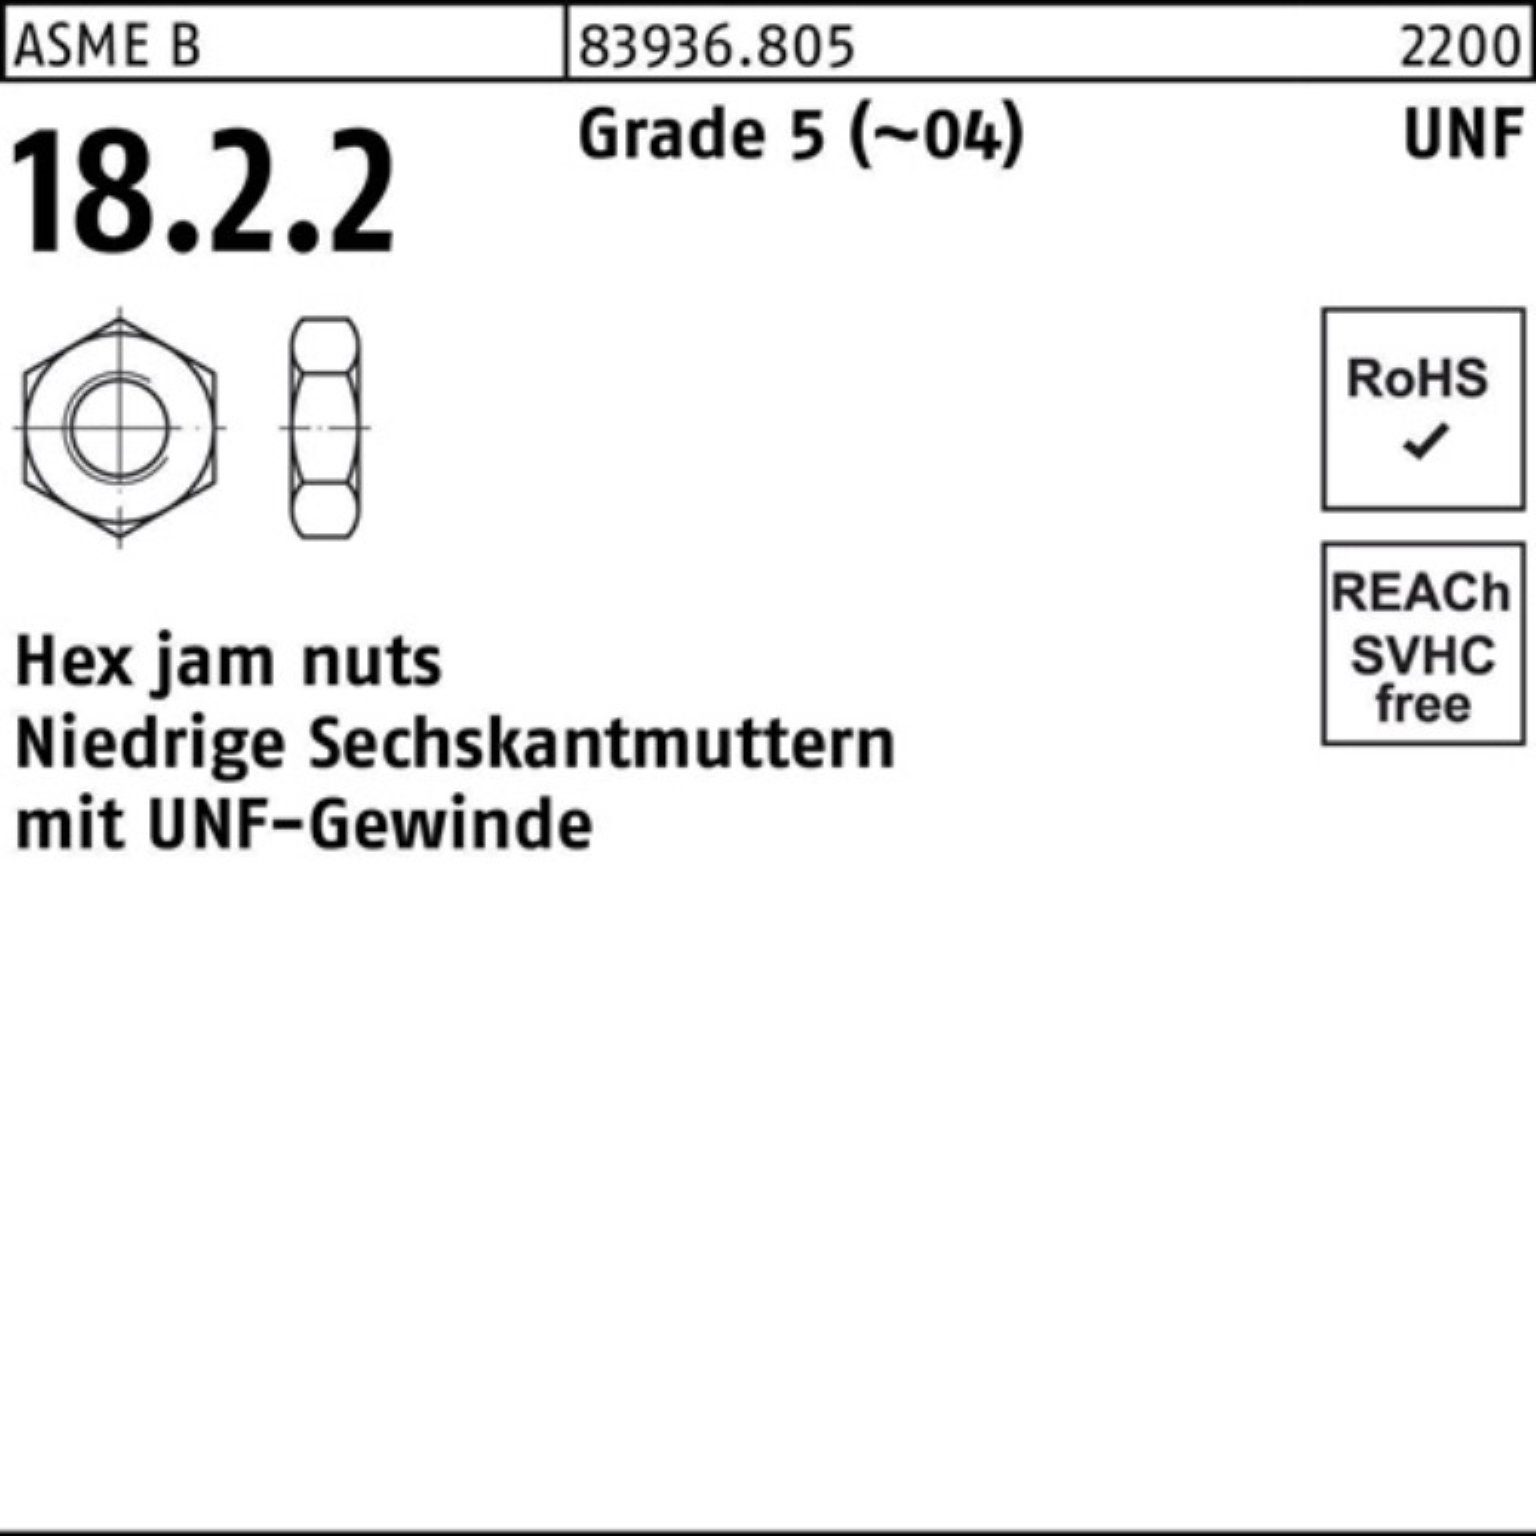 niedrig Sechskantmutter R UNF-Gewinde Reyher Pack 83936 5 3/4 Grade 100er Muttern (0